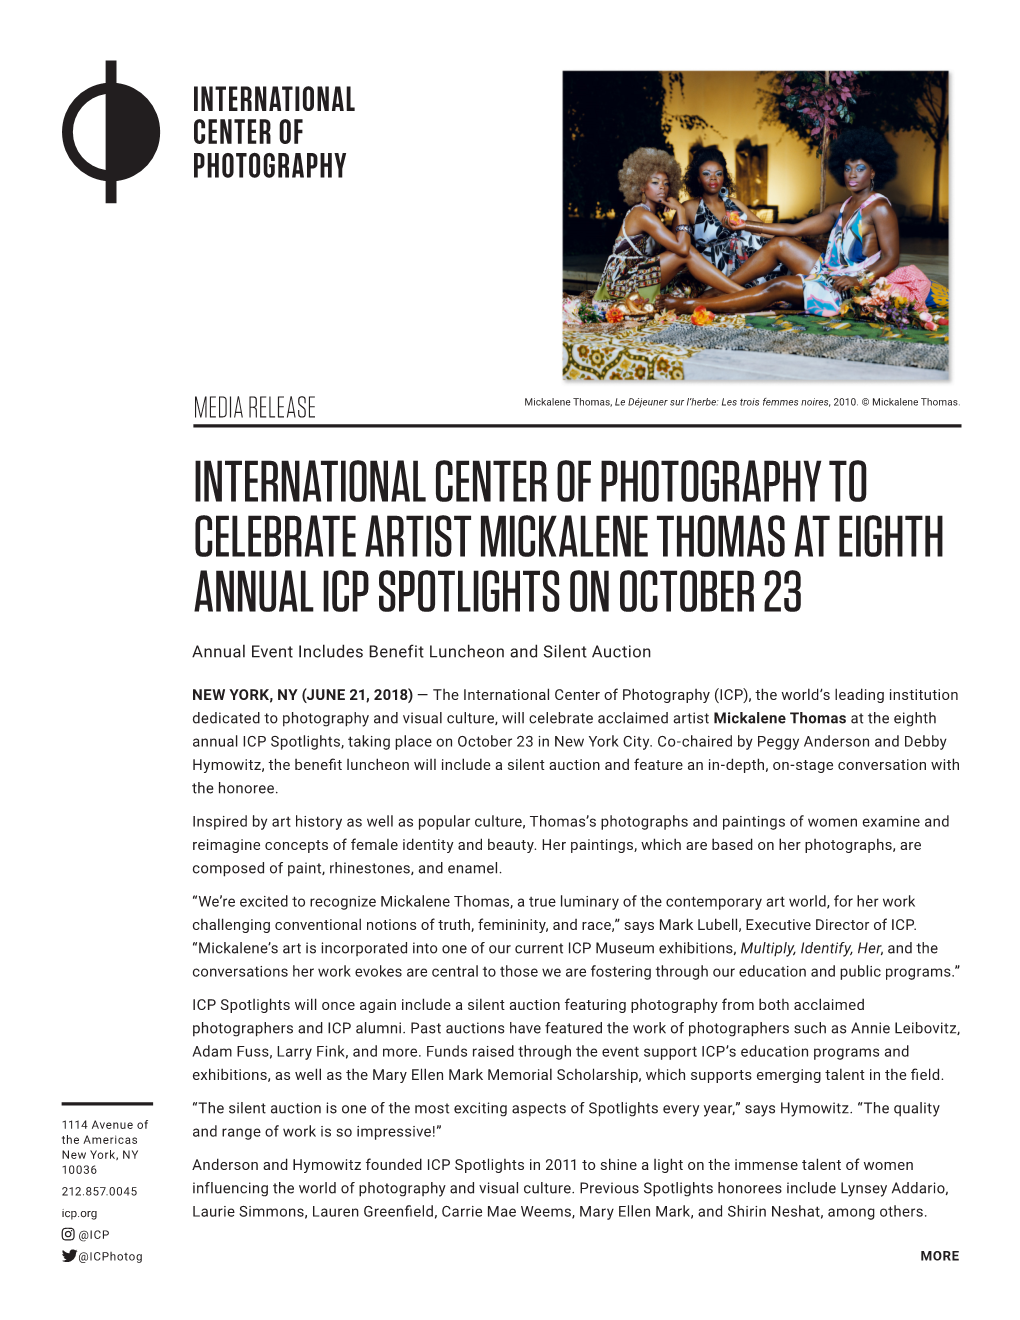 International Center of Photography to Celebrate Artist Mickalene Thomas at Eighth Annual Icp Spotlights on October 23